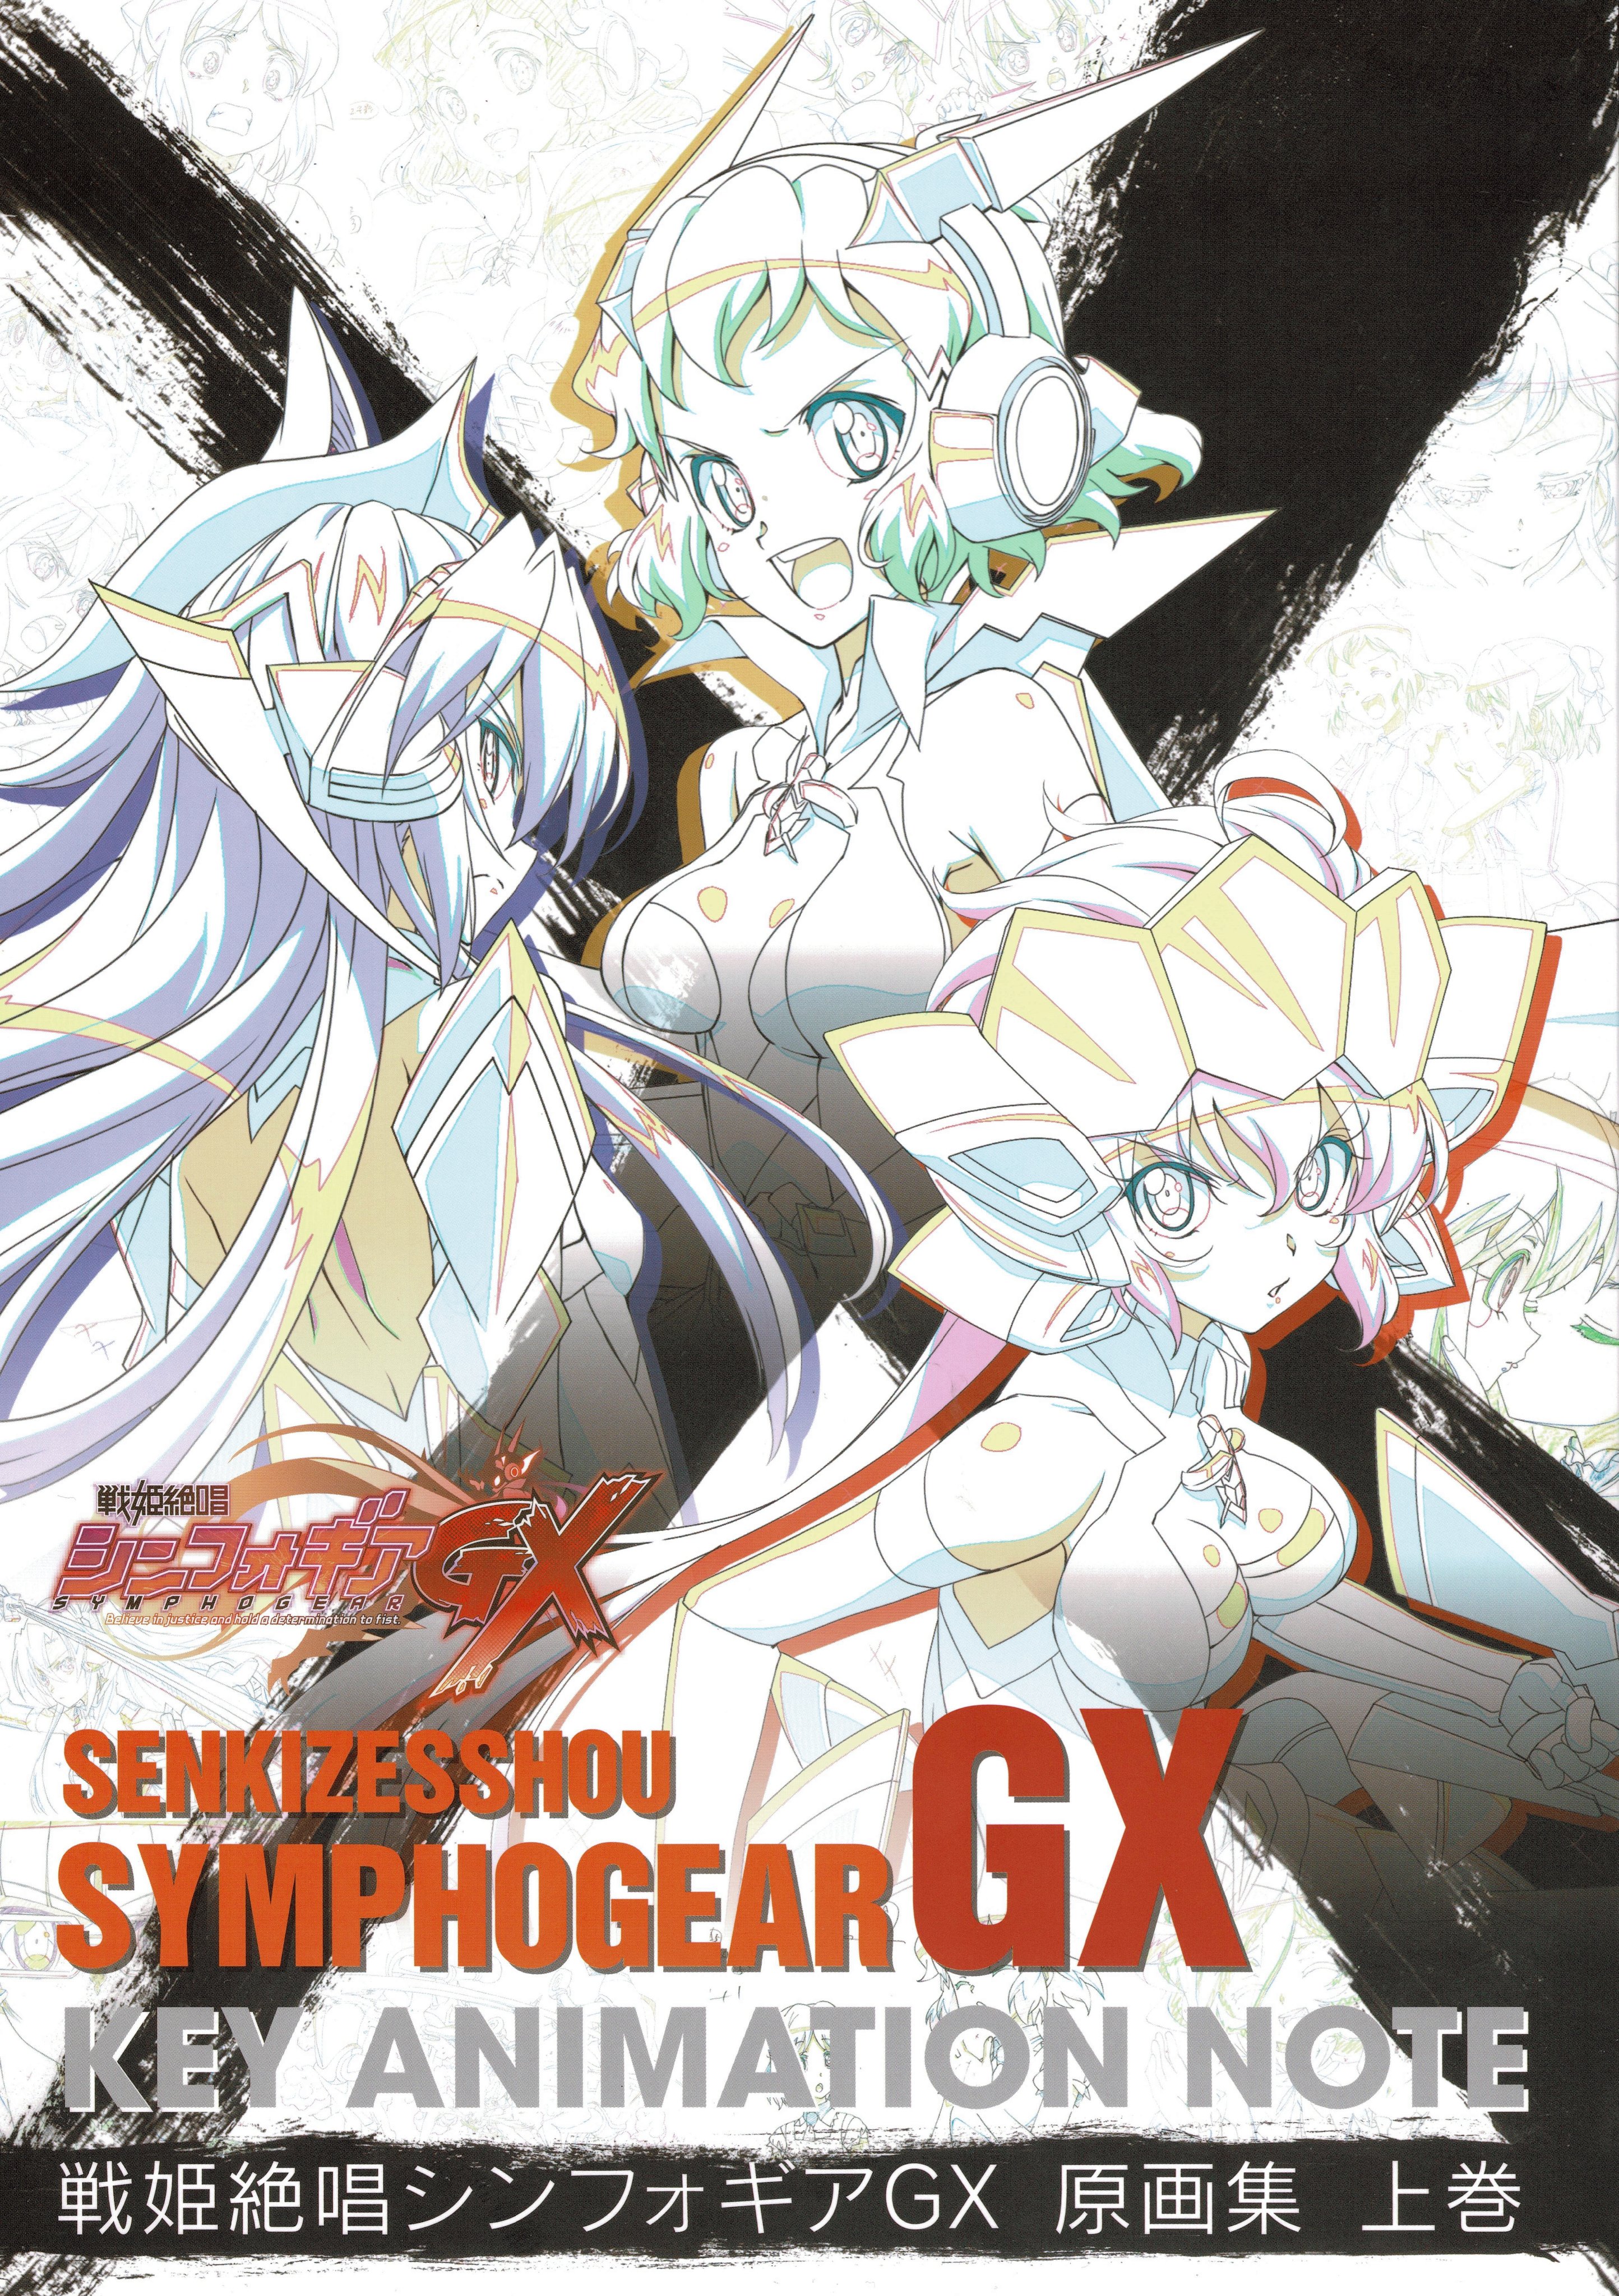 Sakuga ONE 「作画1️⃣」 on X: O usuário @/g6xa3awstGCEljS aqui